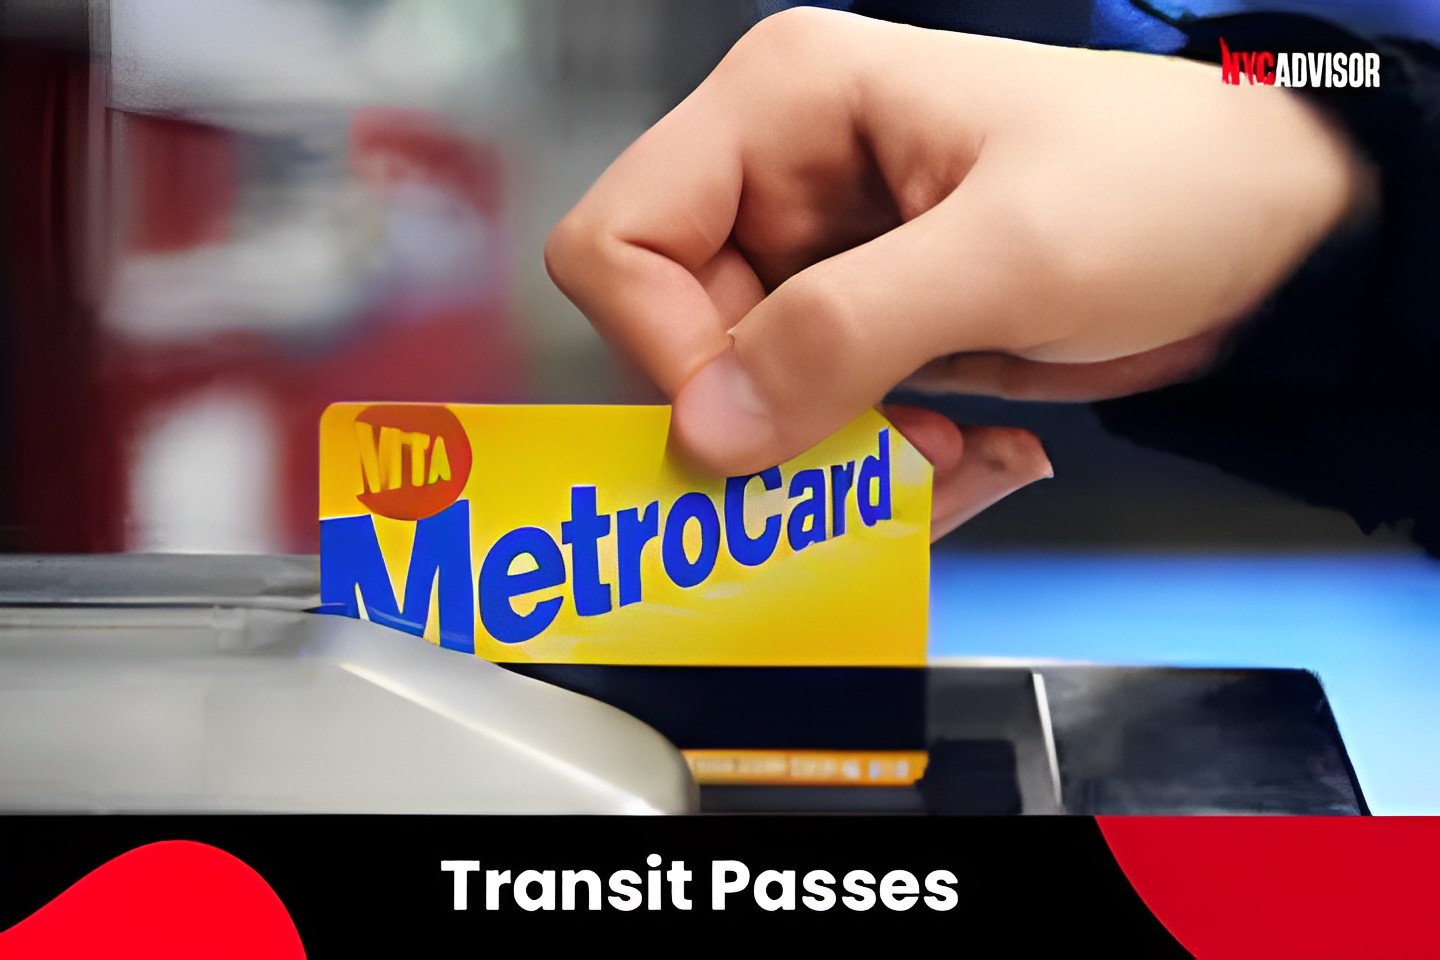 Transit Passes in New York City